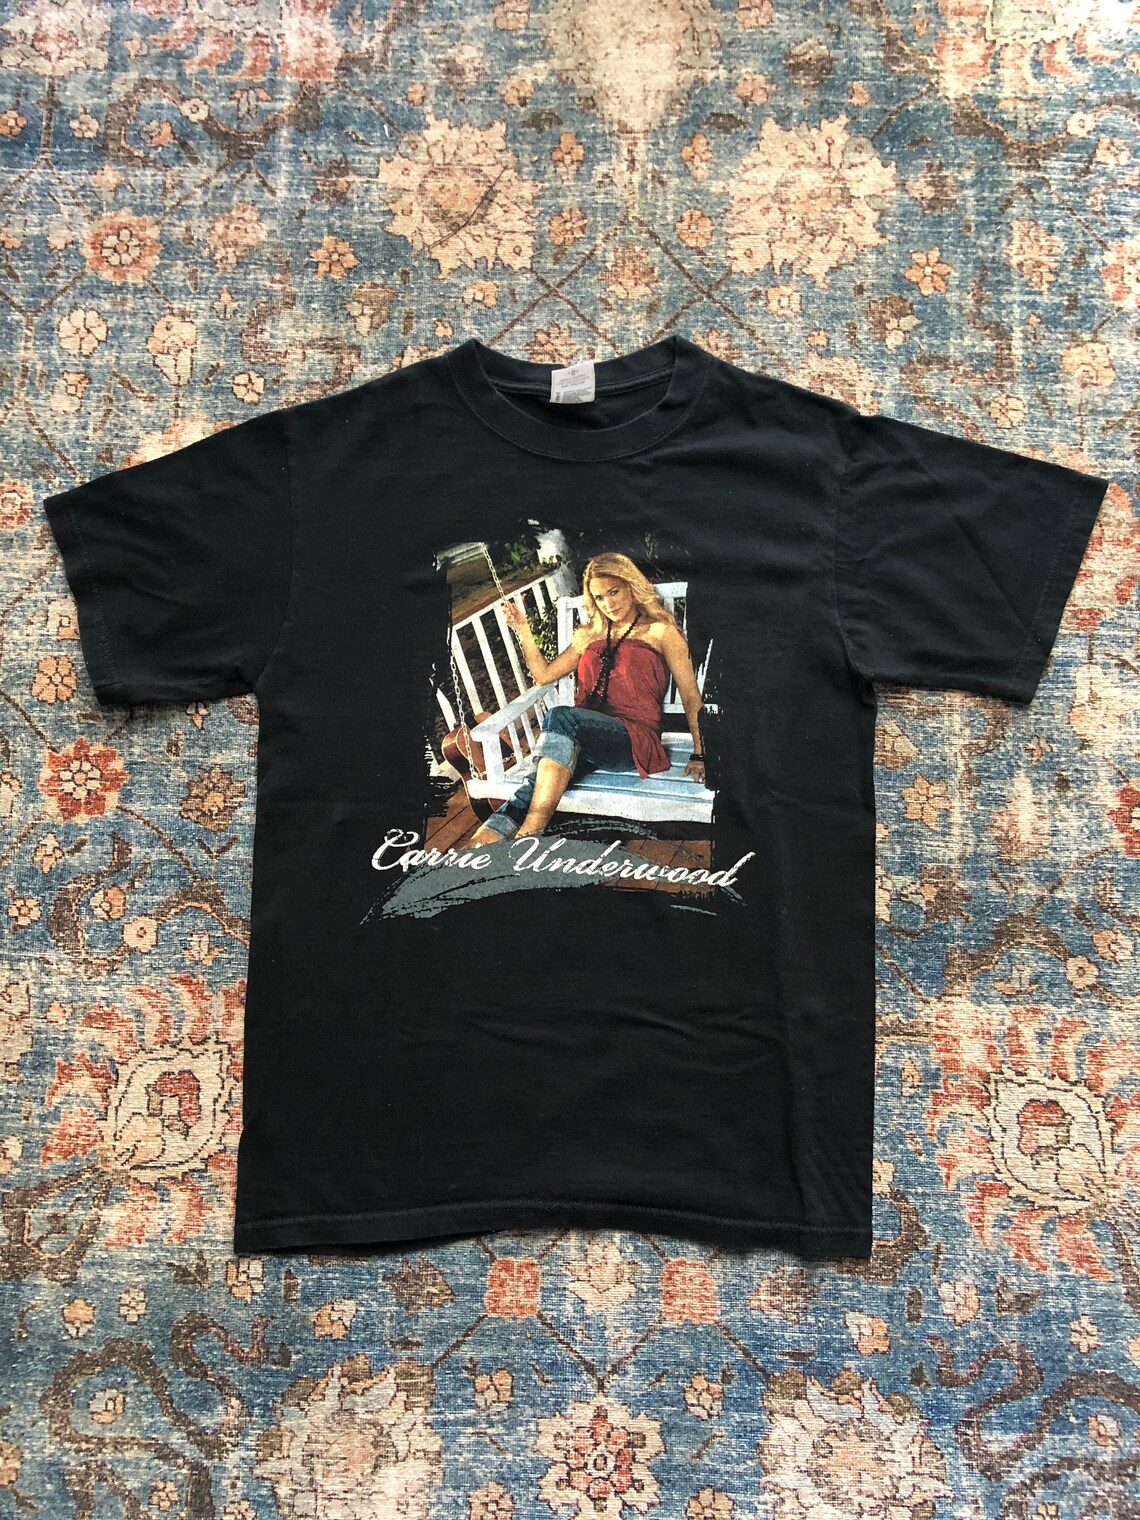 Carrie Underwood 2006 Live Tour Vintage Distressed T-Shirt | Etsy